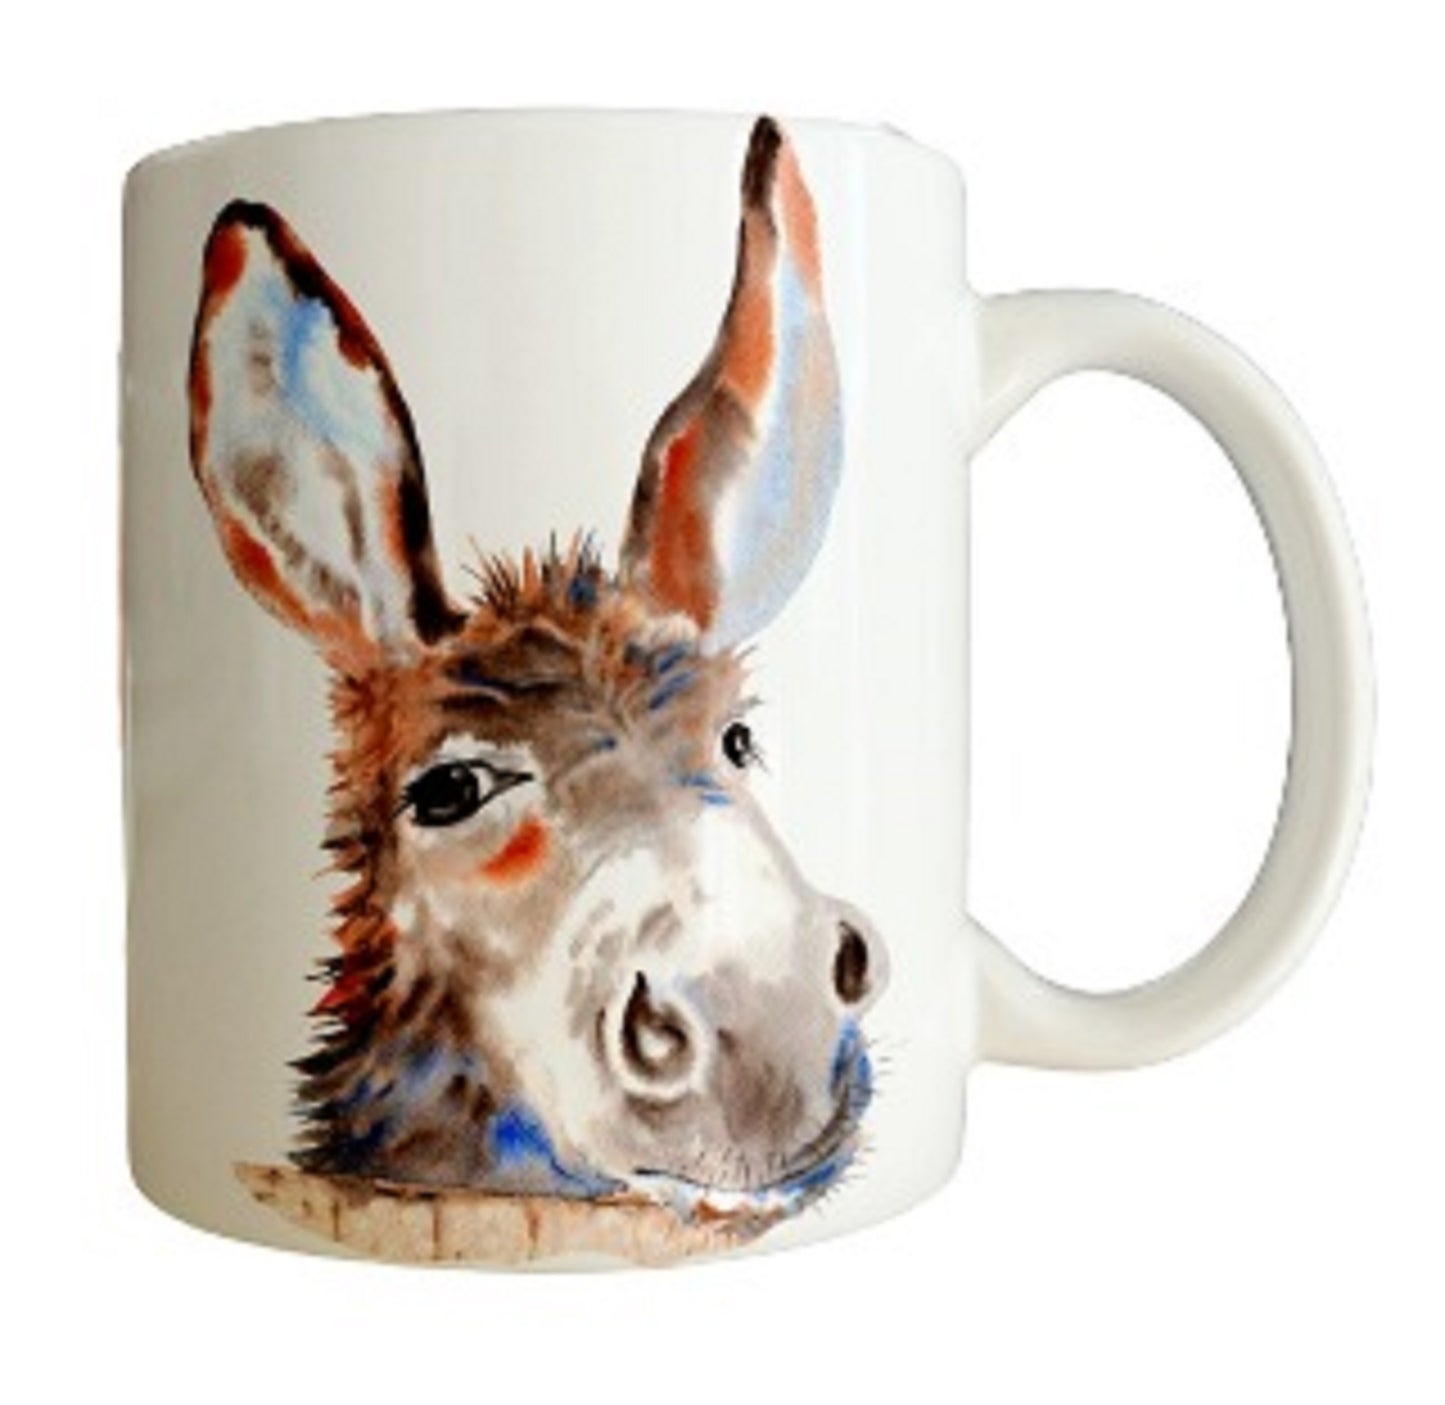  Watercolour Donkey Coffee Mug by Free Spirit Accessories sold by Free Spirit Accessories